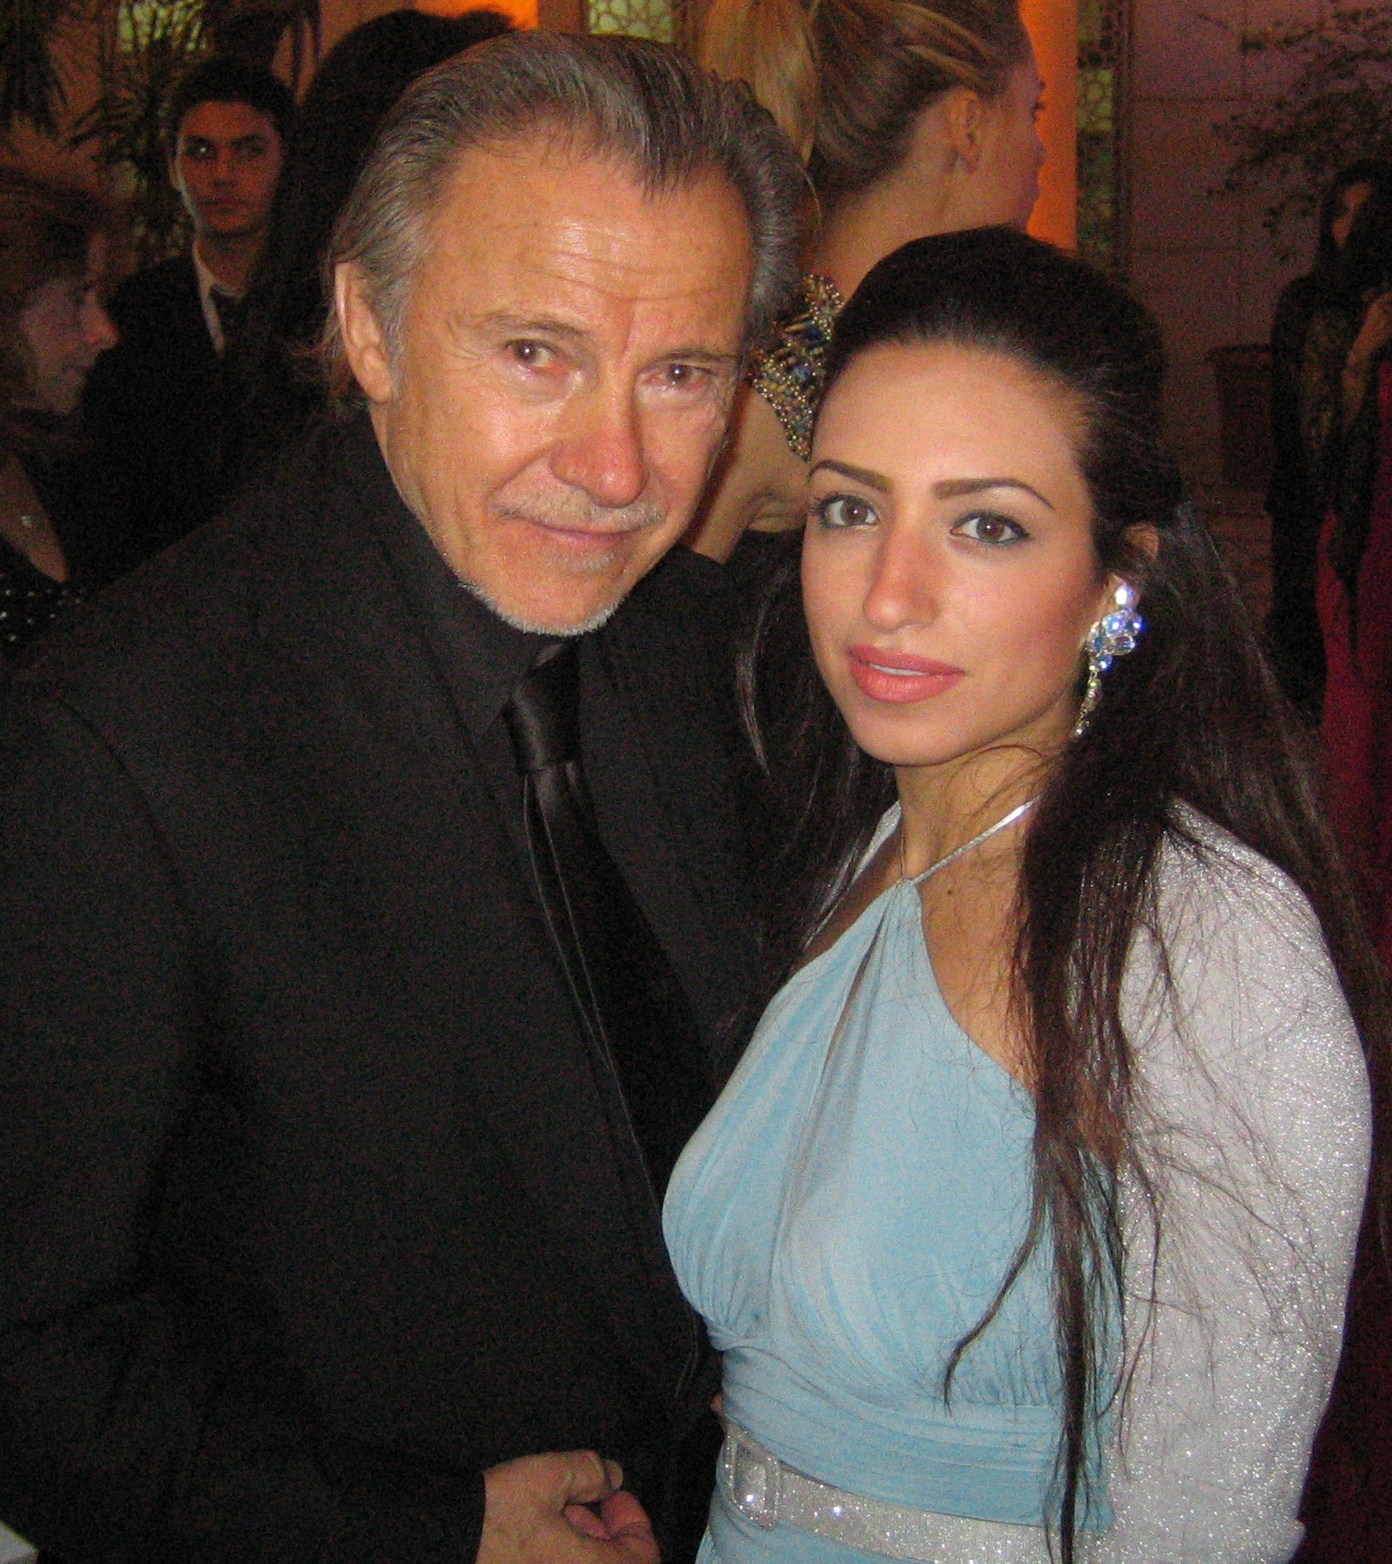 Christine Solomon and Harvey Keitel at The International Cairo Film Festival 2007